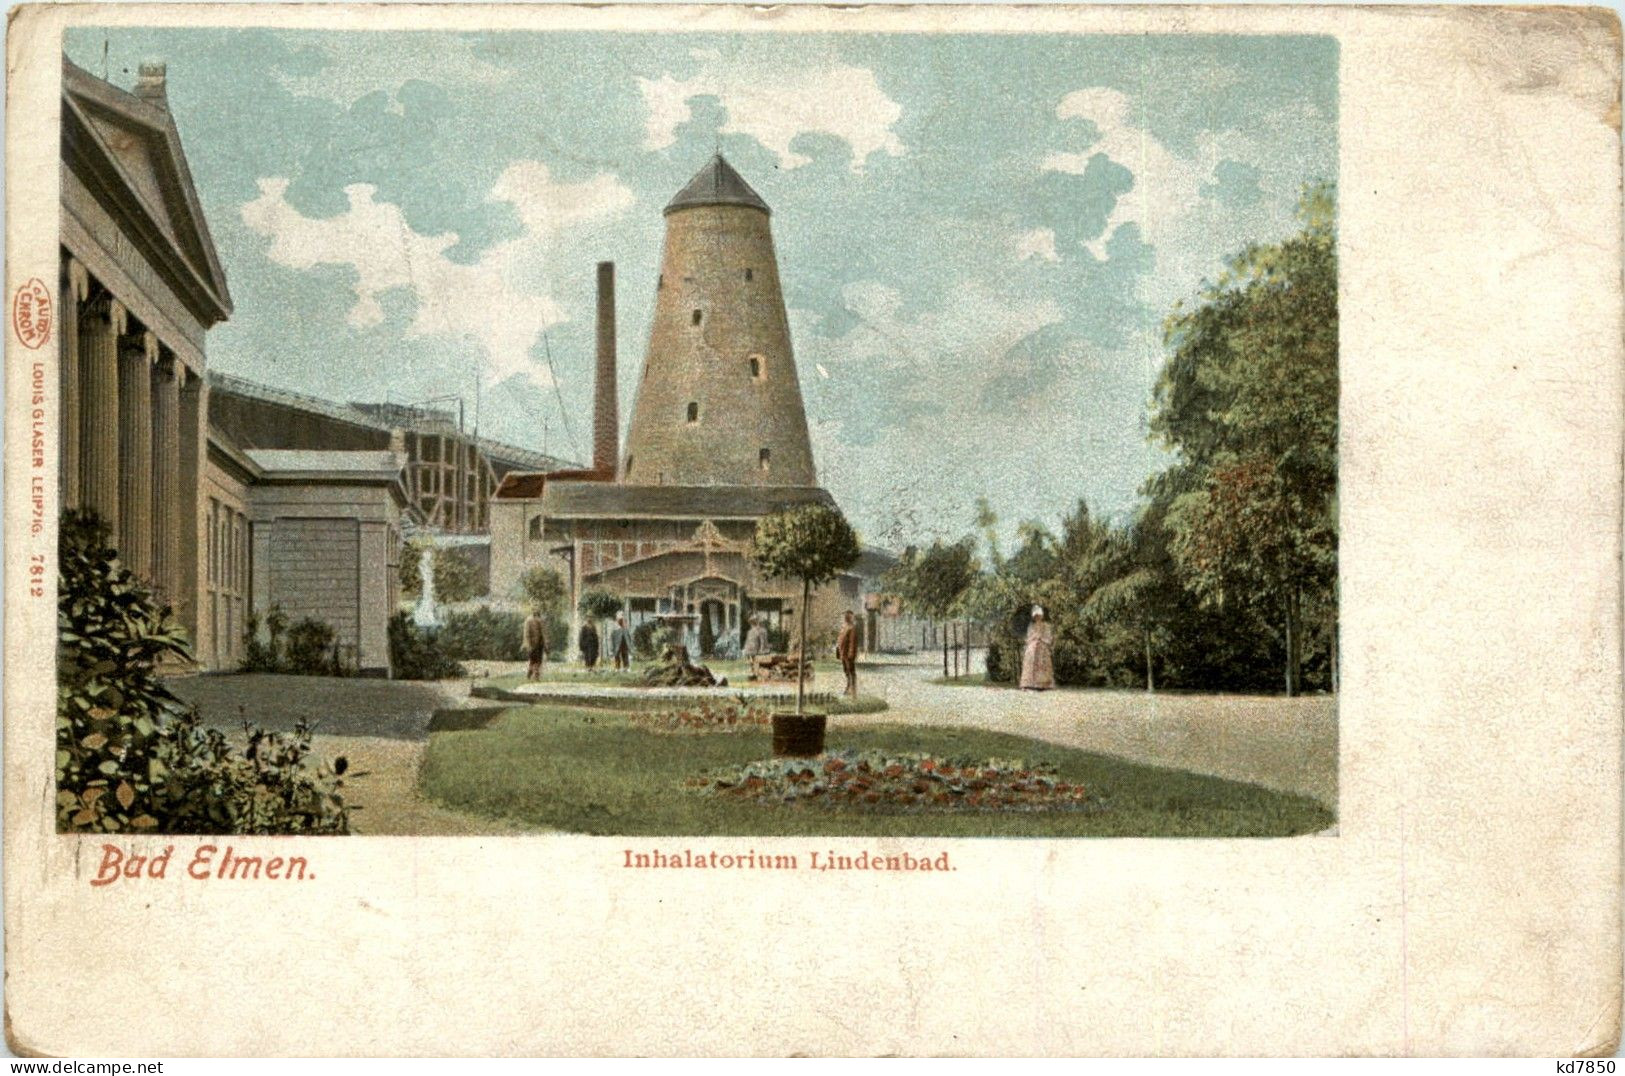 Bad Elmen - Inhalatorium Lindenbad - Schoenebeck (Elbe)